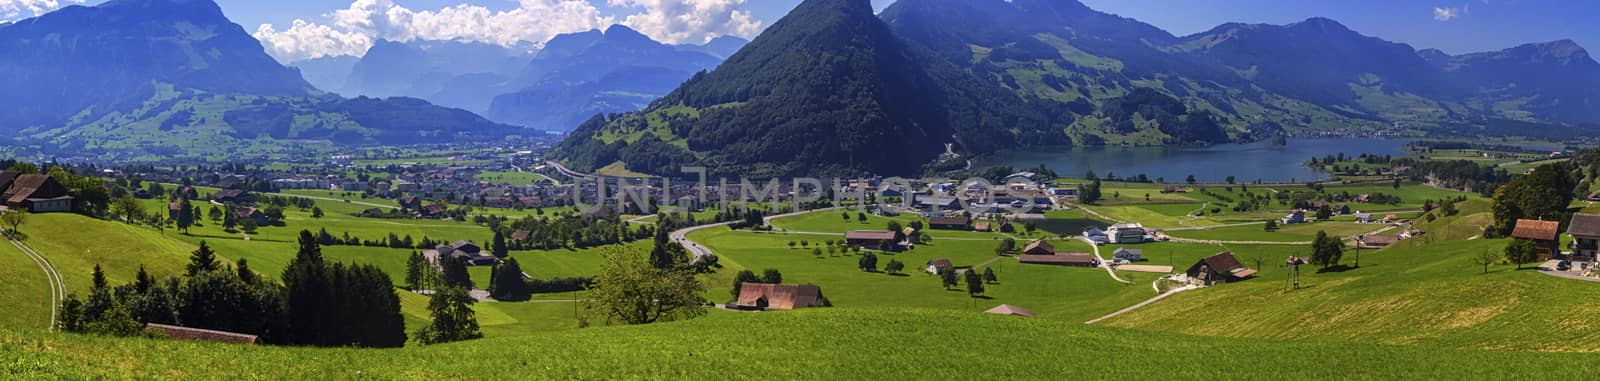 Schwyz canton panoramic view, Switzerland by Elenaphotos21